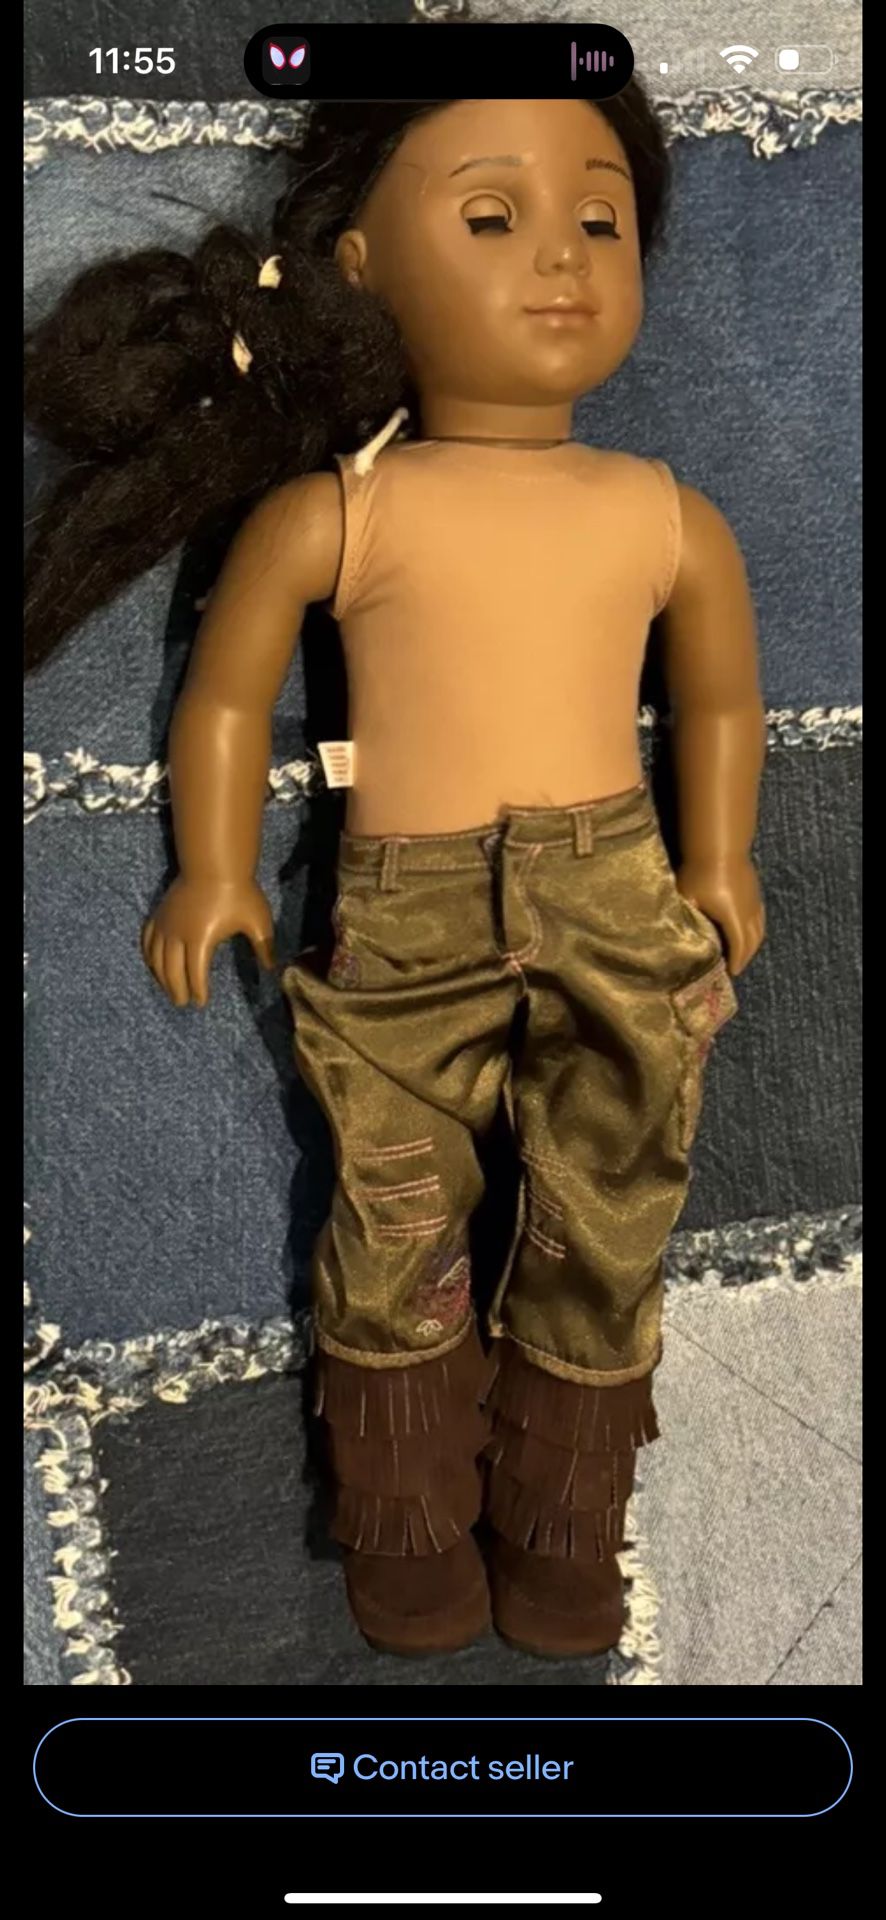 Pleasant Company KAYA 18” American Girl Doll 2002 Native American Marks As Is